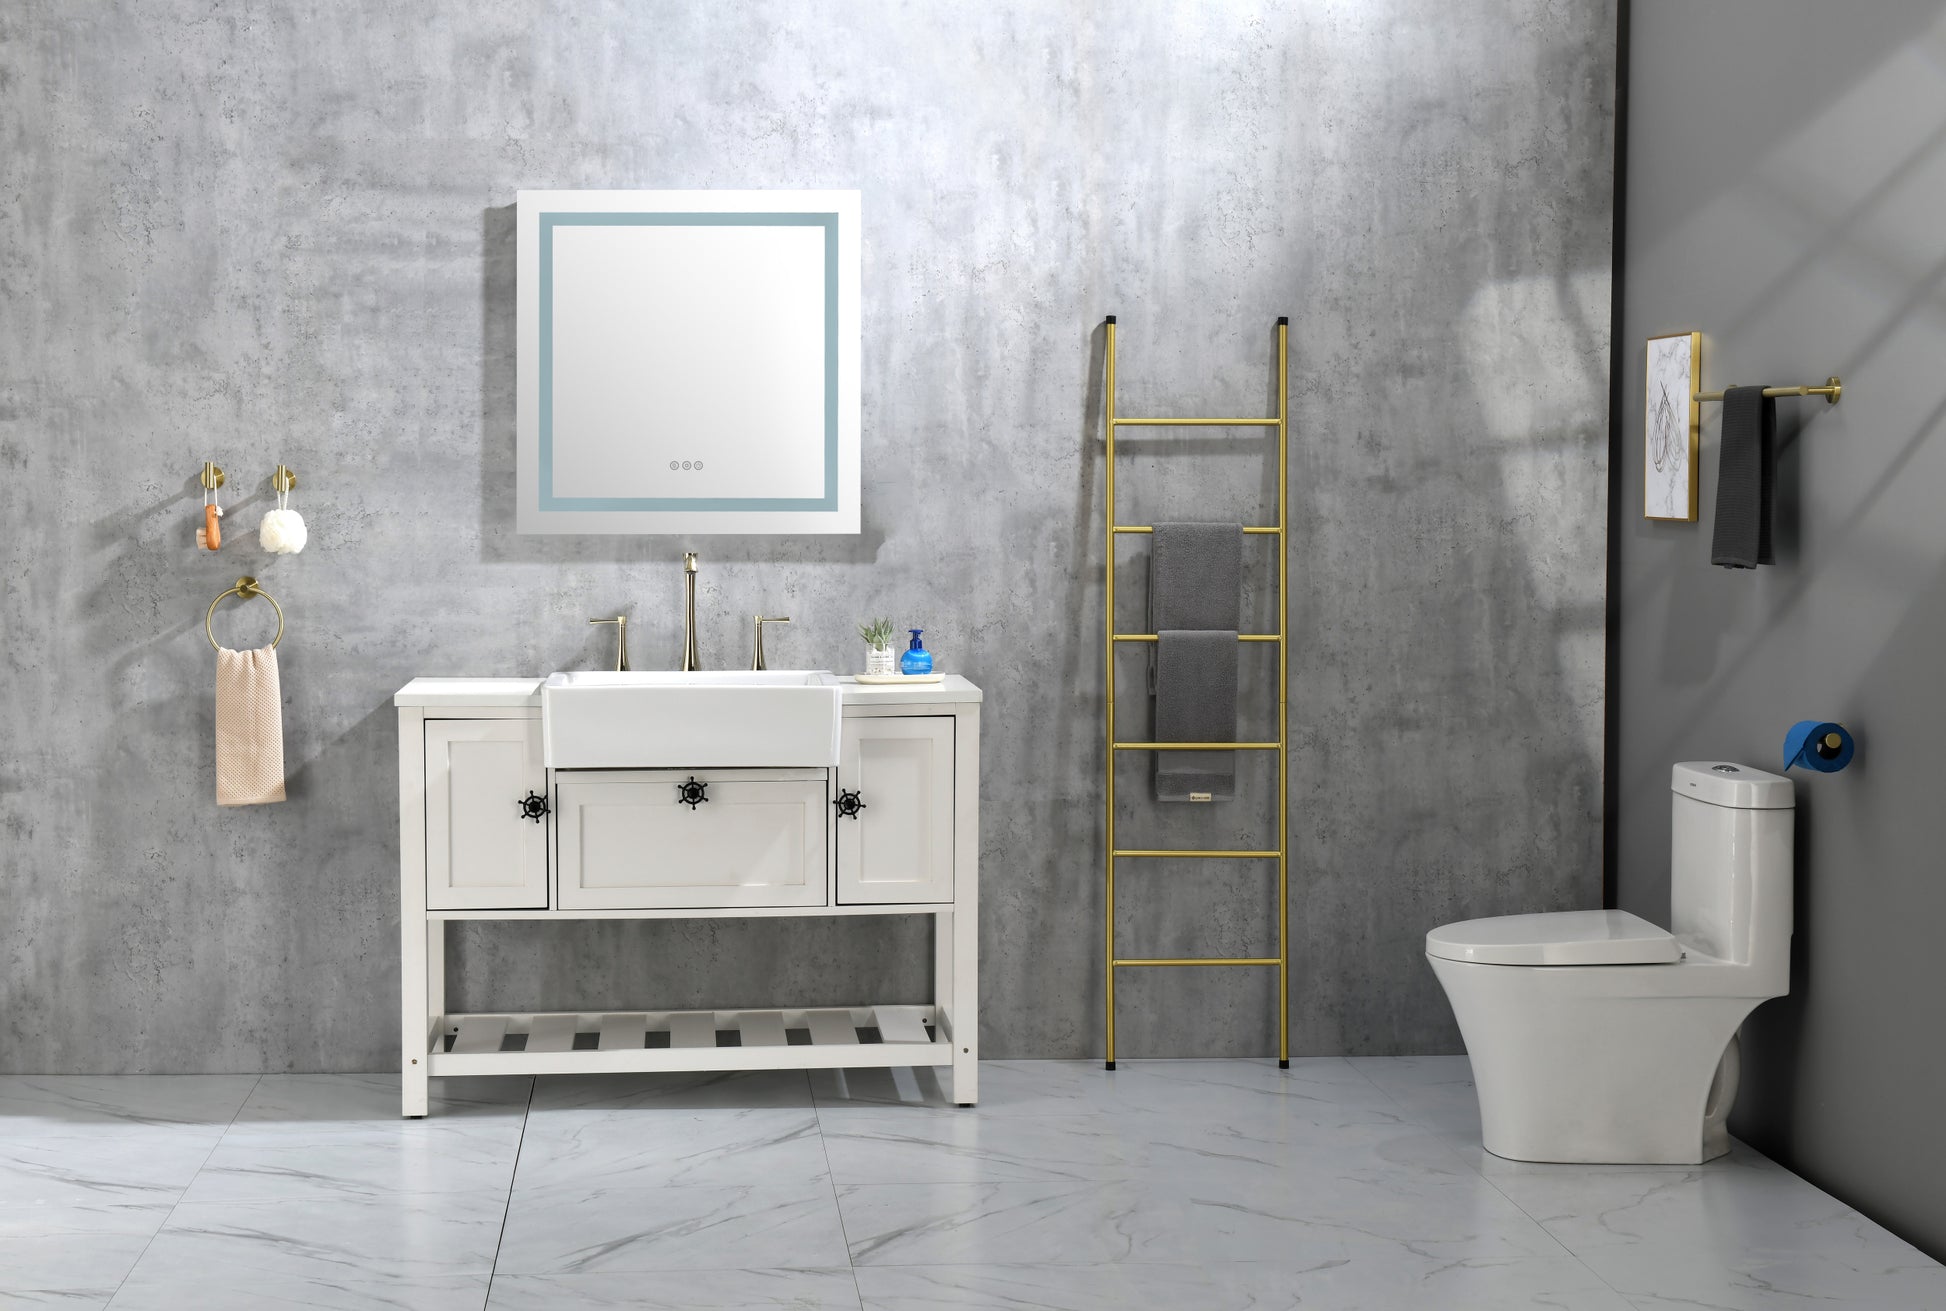 36x 36Inch LED Mirror Bathroom Vanity Mirrors with white-aluminium